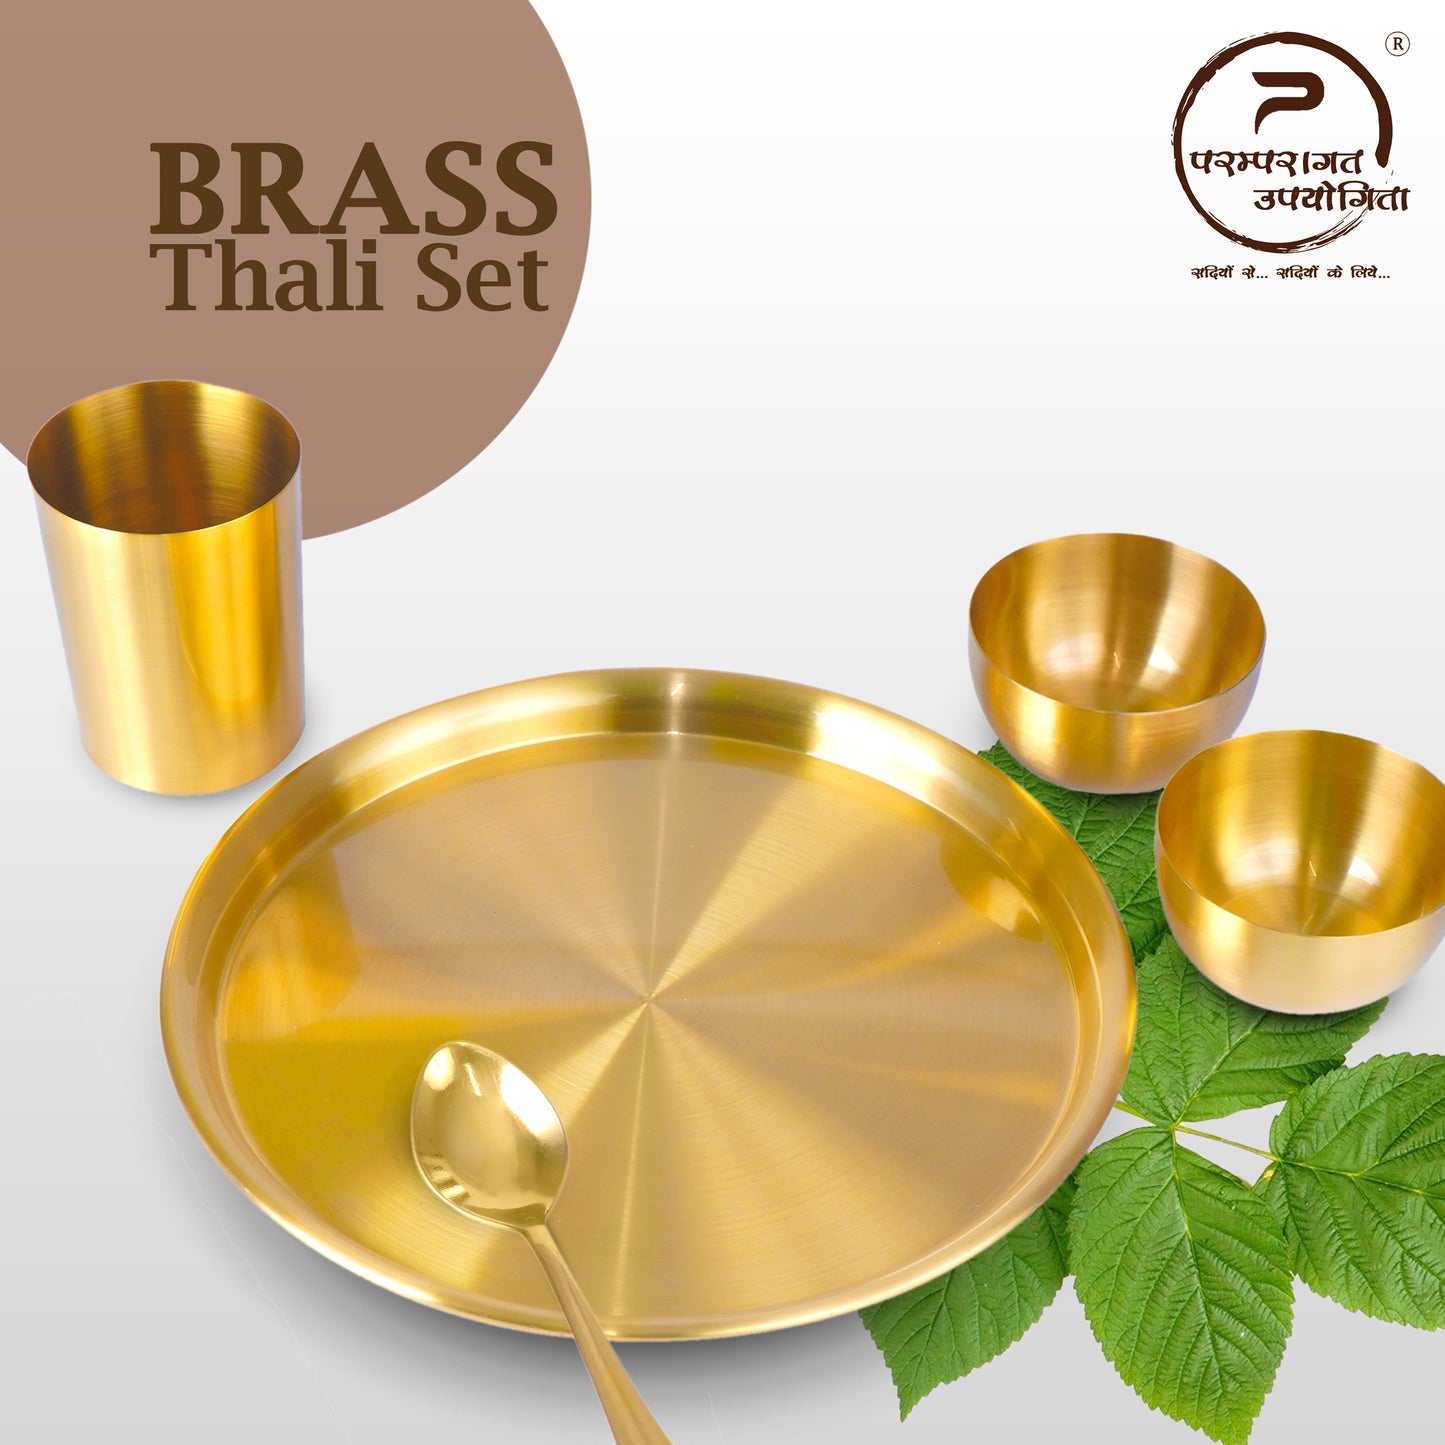 Paramparagat Upyogita Swarna Devyani 13" Brass Single Thali Set